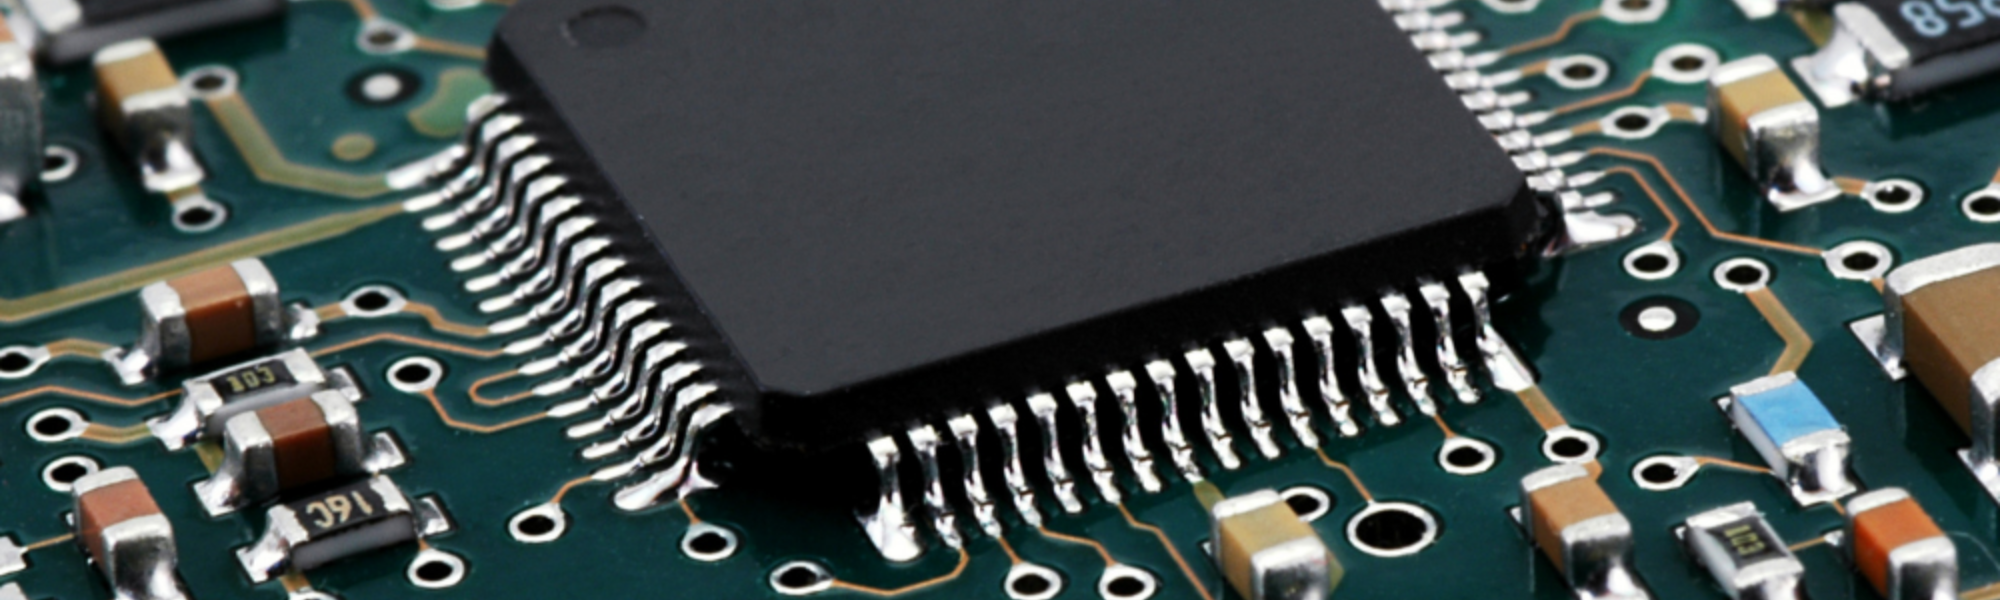 Image of microchip circuit board